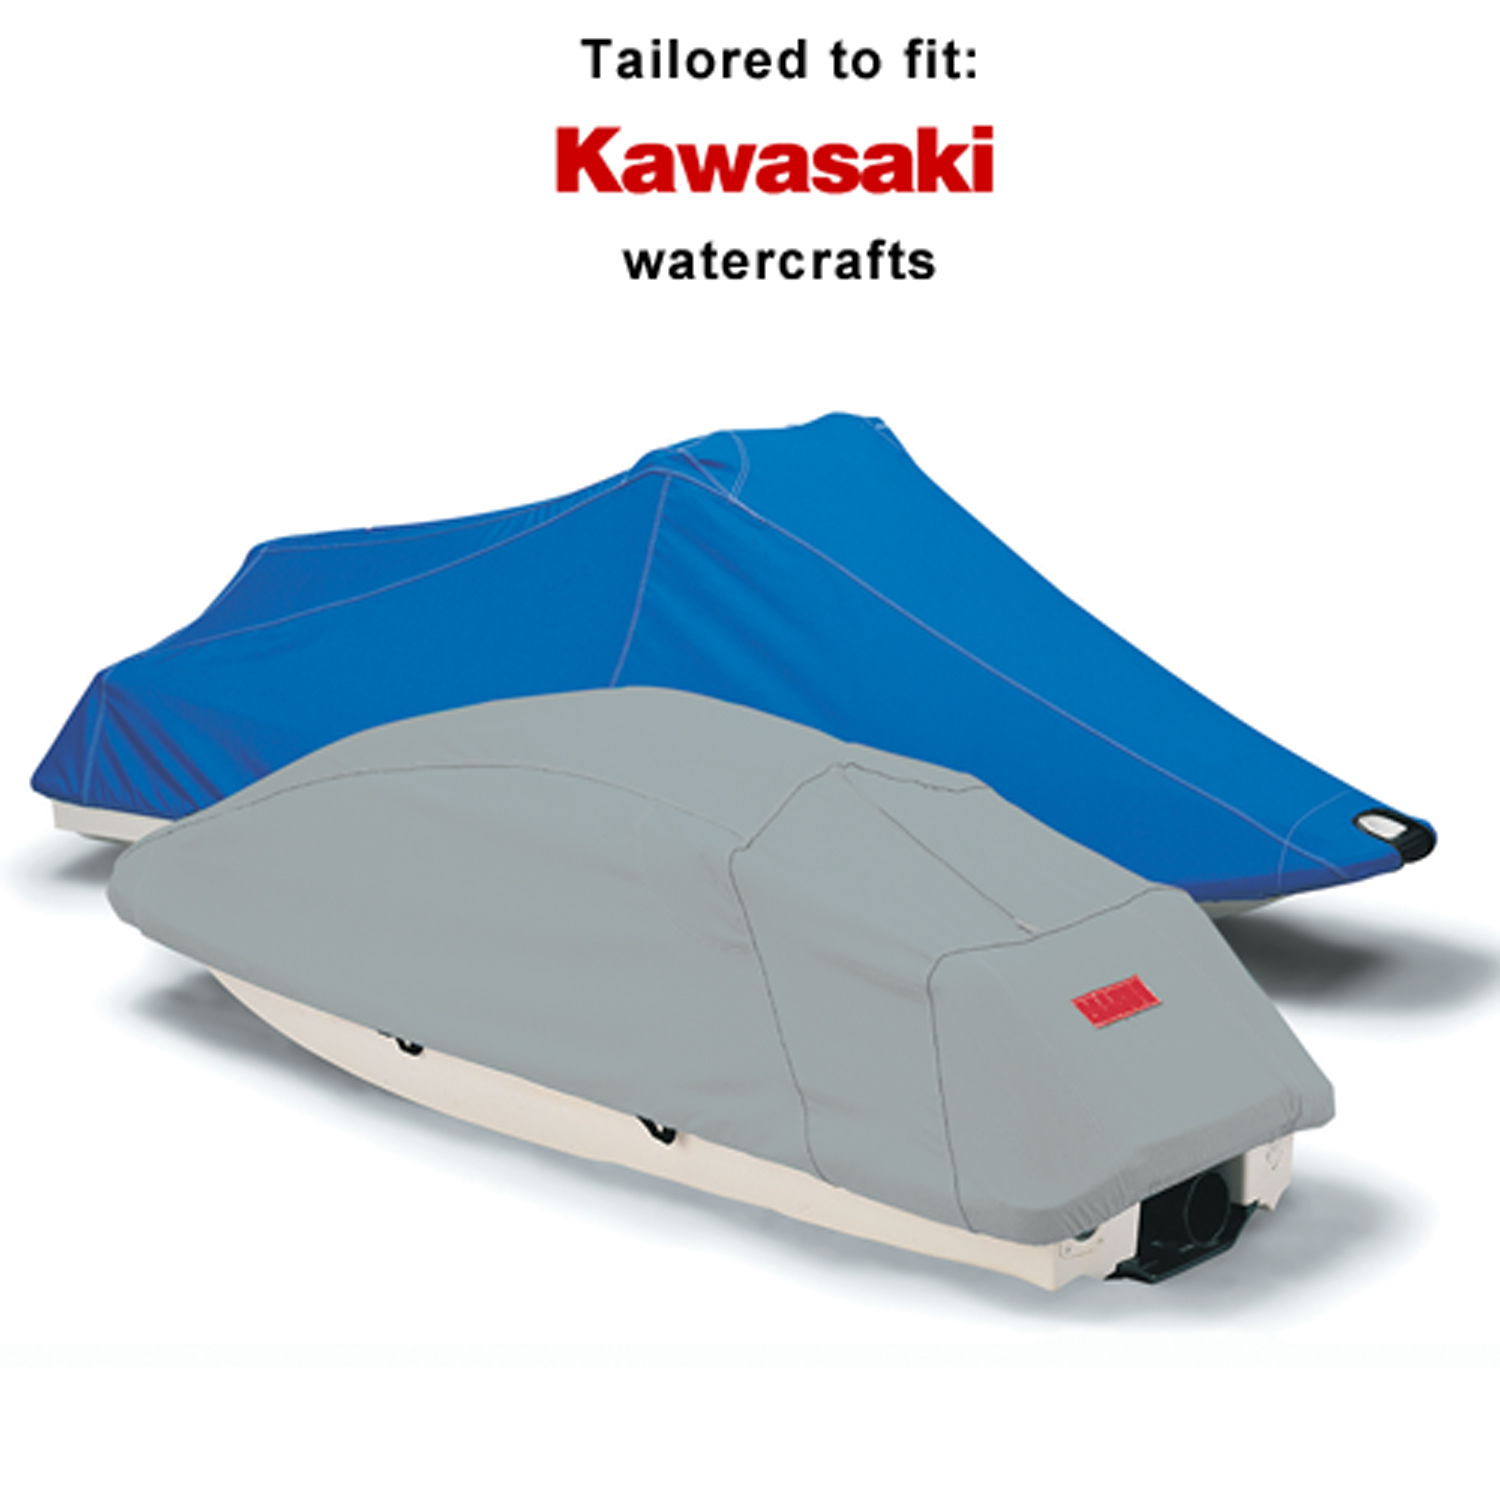 Kawasaki vattenskoter kategoribild